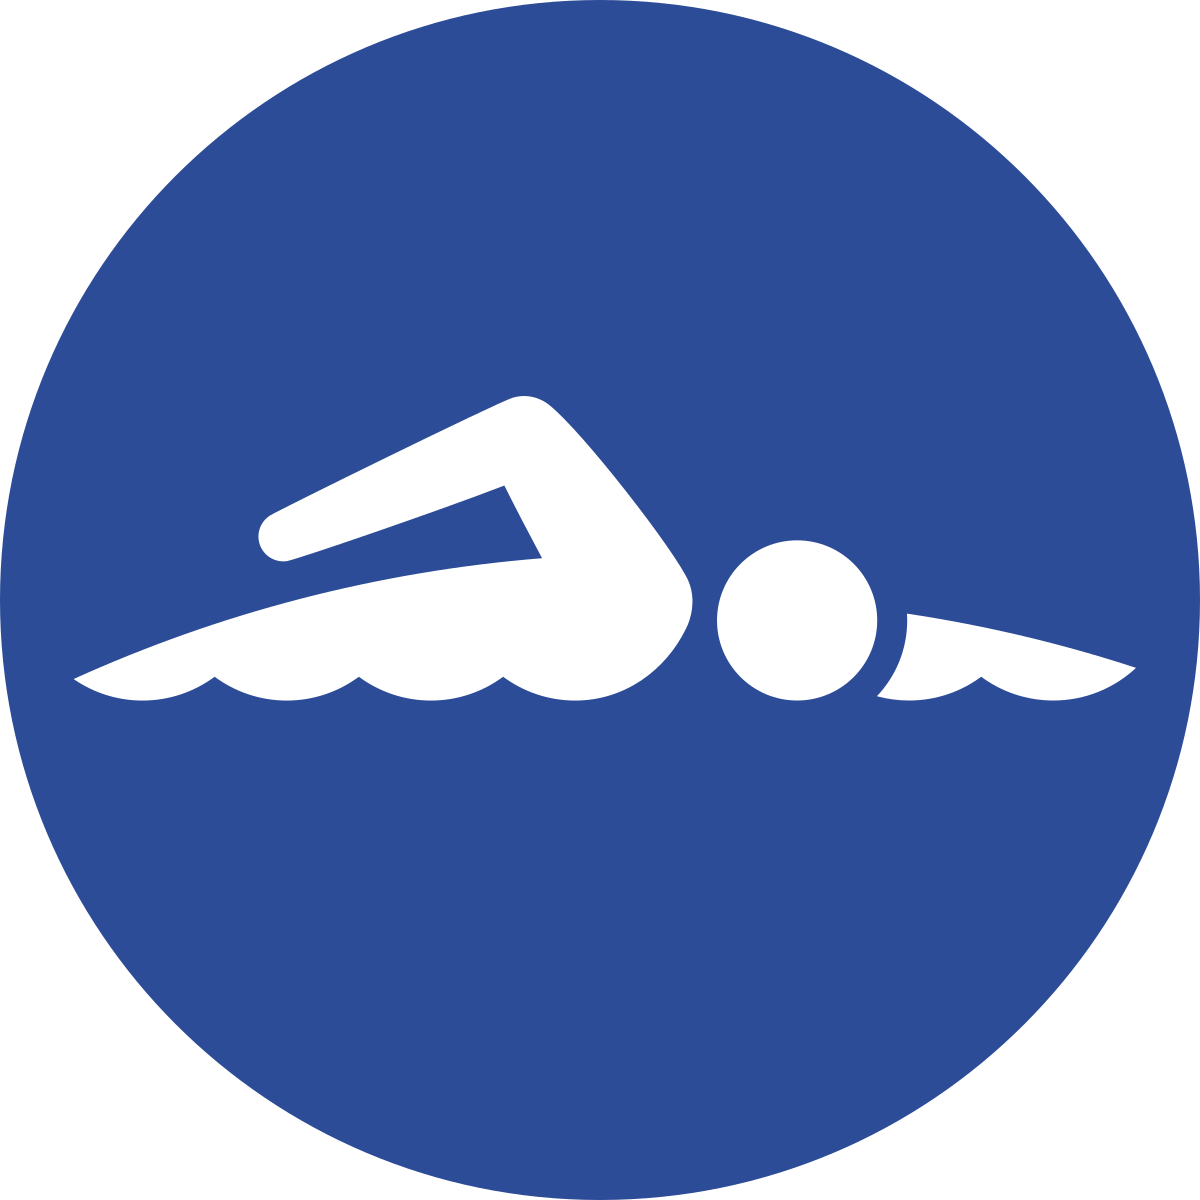 Swimming olympics 2020